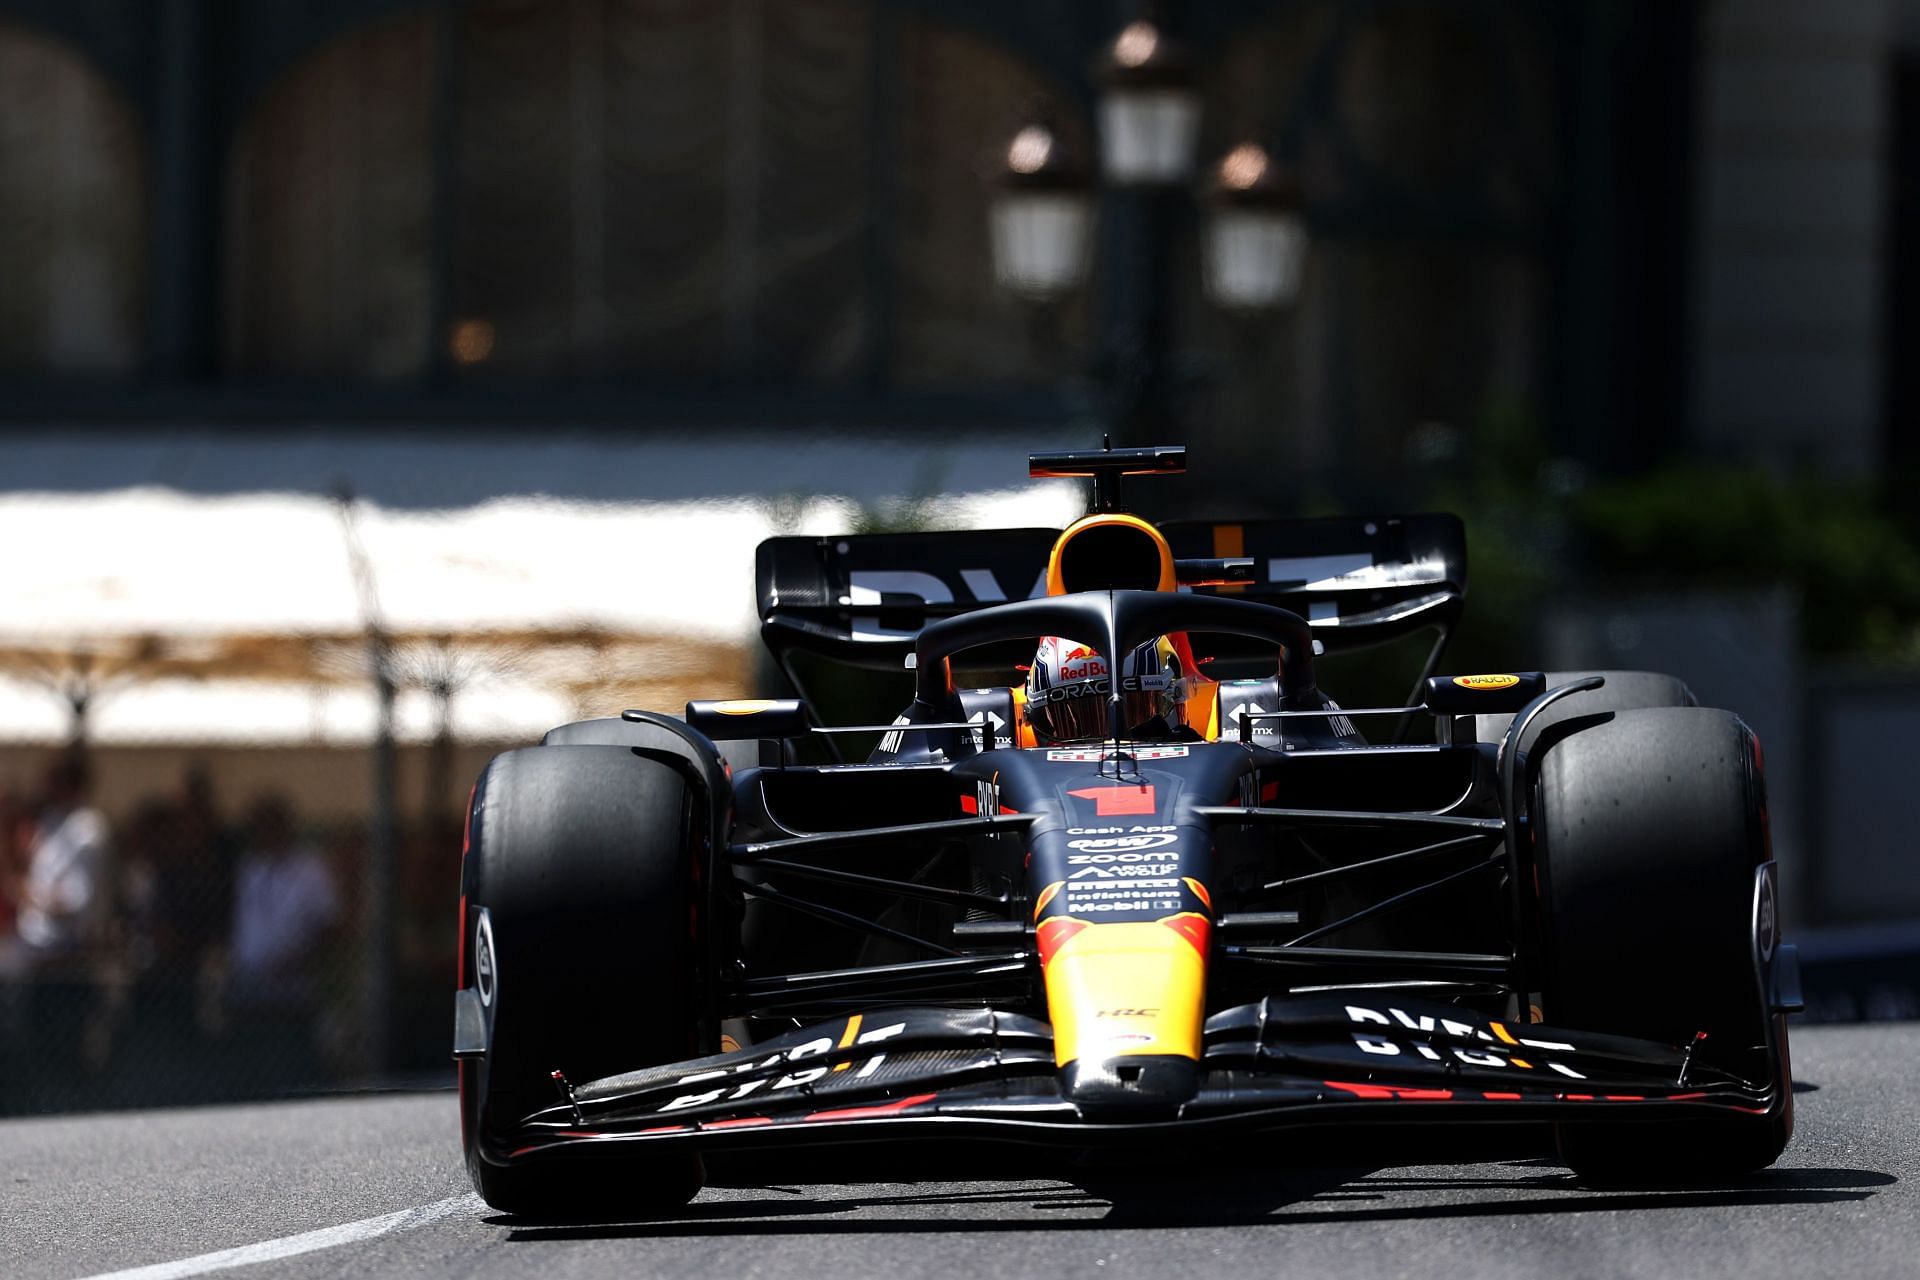 F1 Grand Prix of Monaco - Final Practice